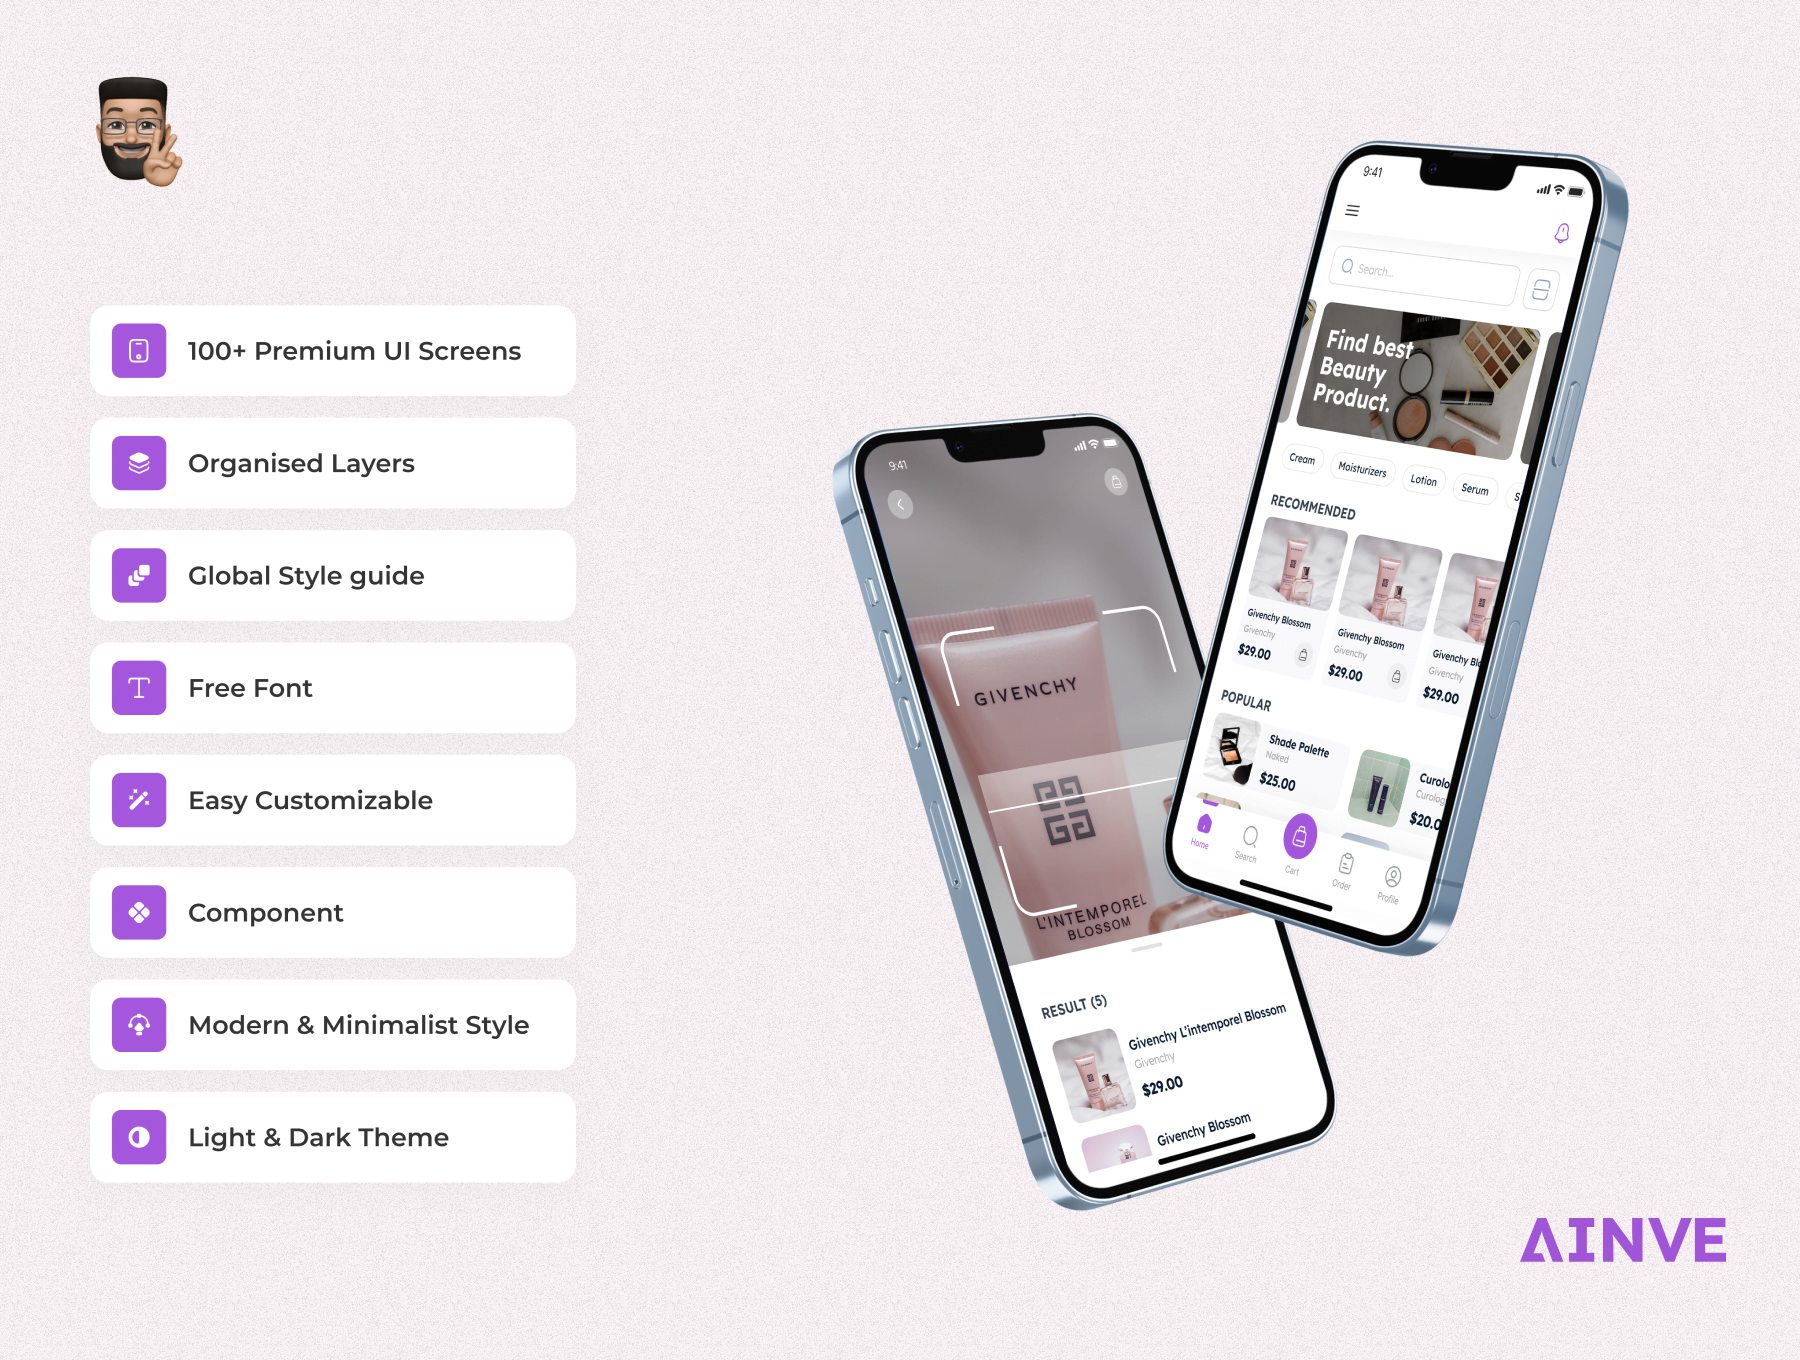 Ainve 美容产品应用程序设计 Ainve Beauty Product App Design-UI/UX-到位啦UI